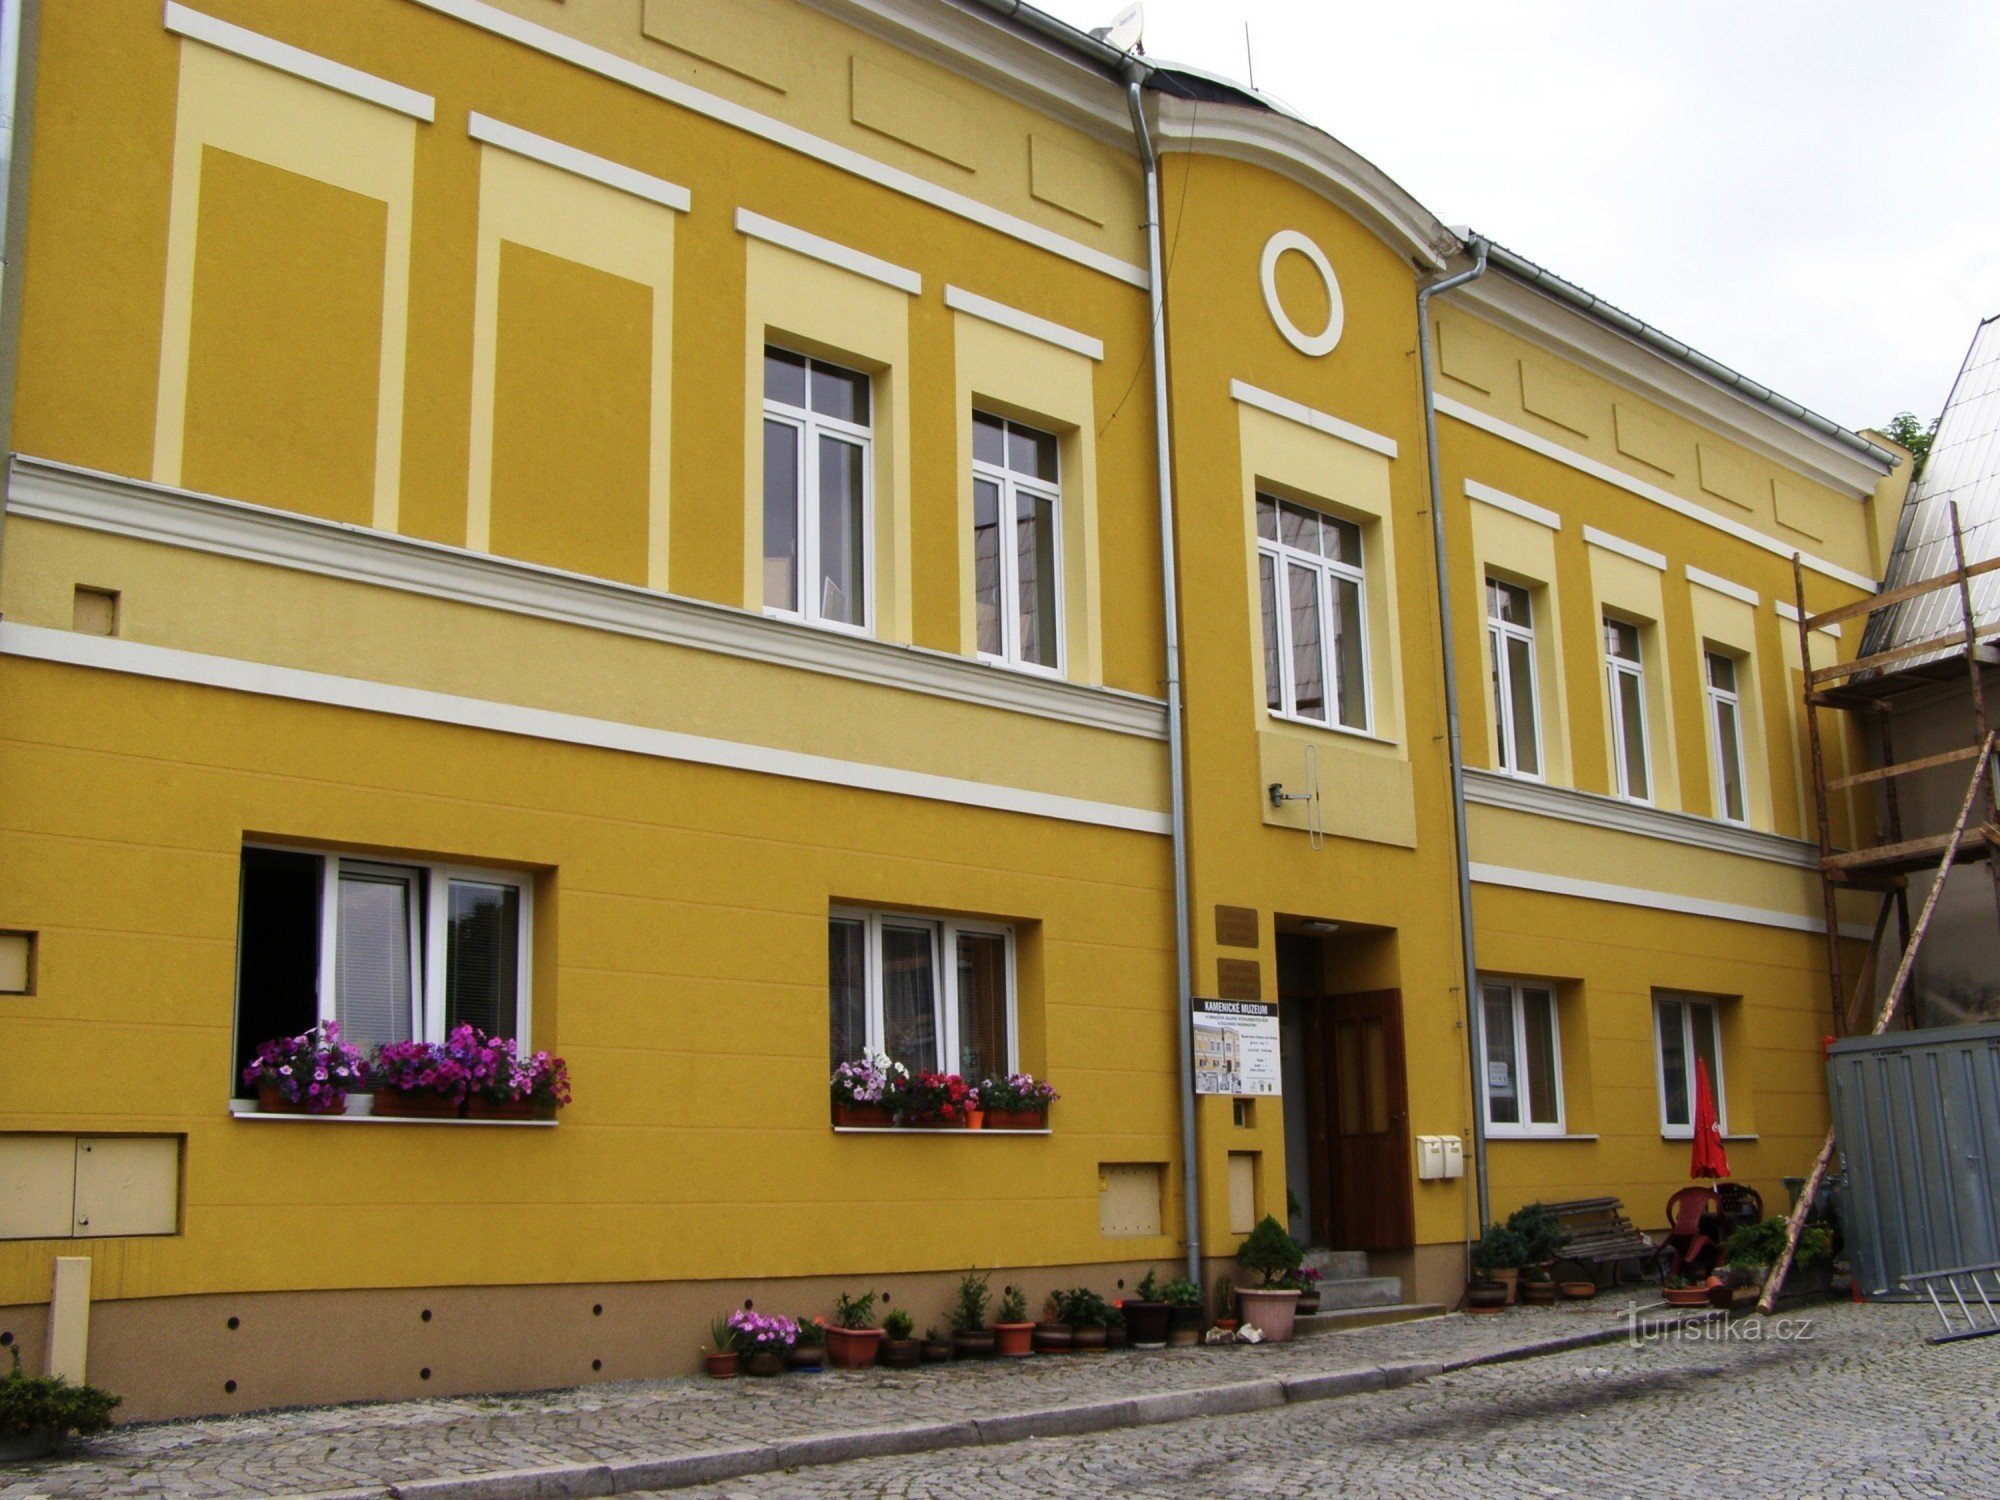 Žulová - Kamenické музей, Туристичний інформаційний центр, бібліотека